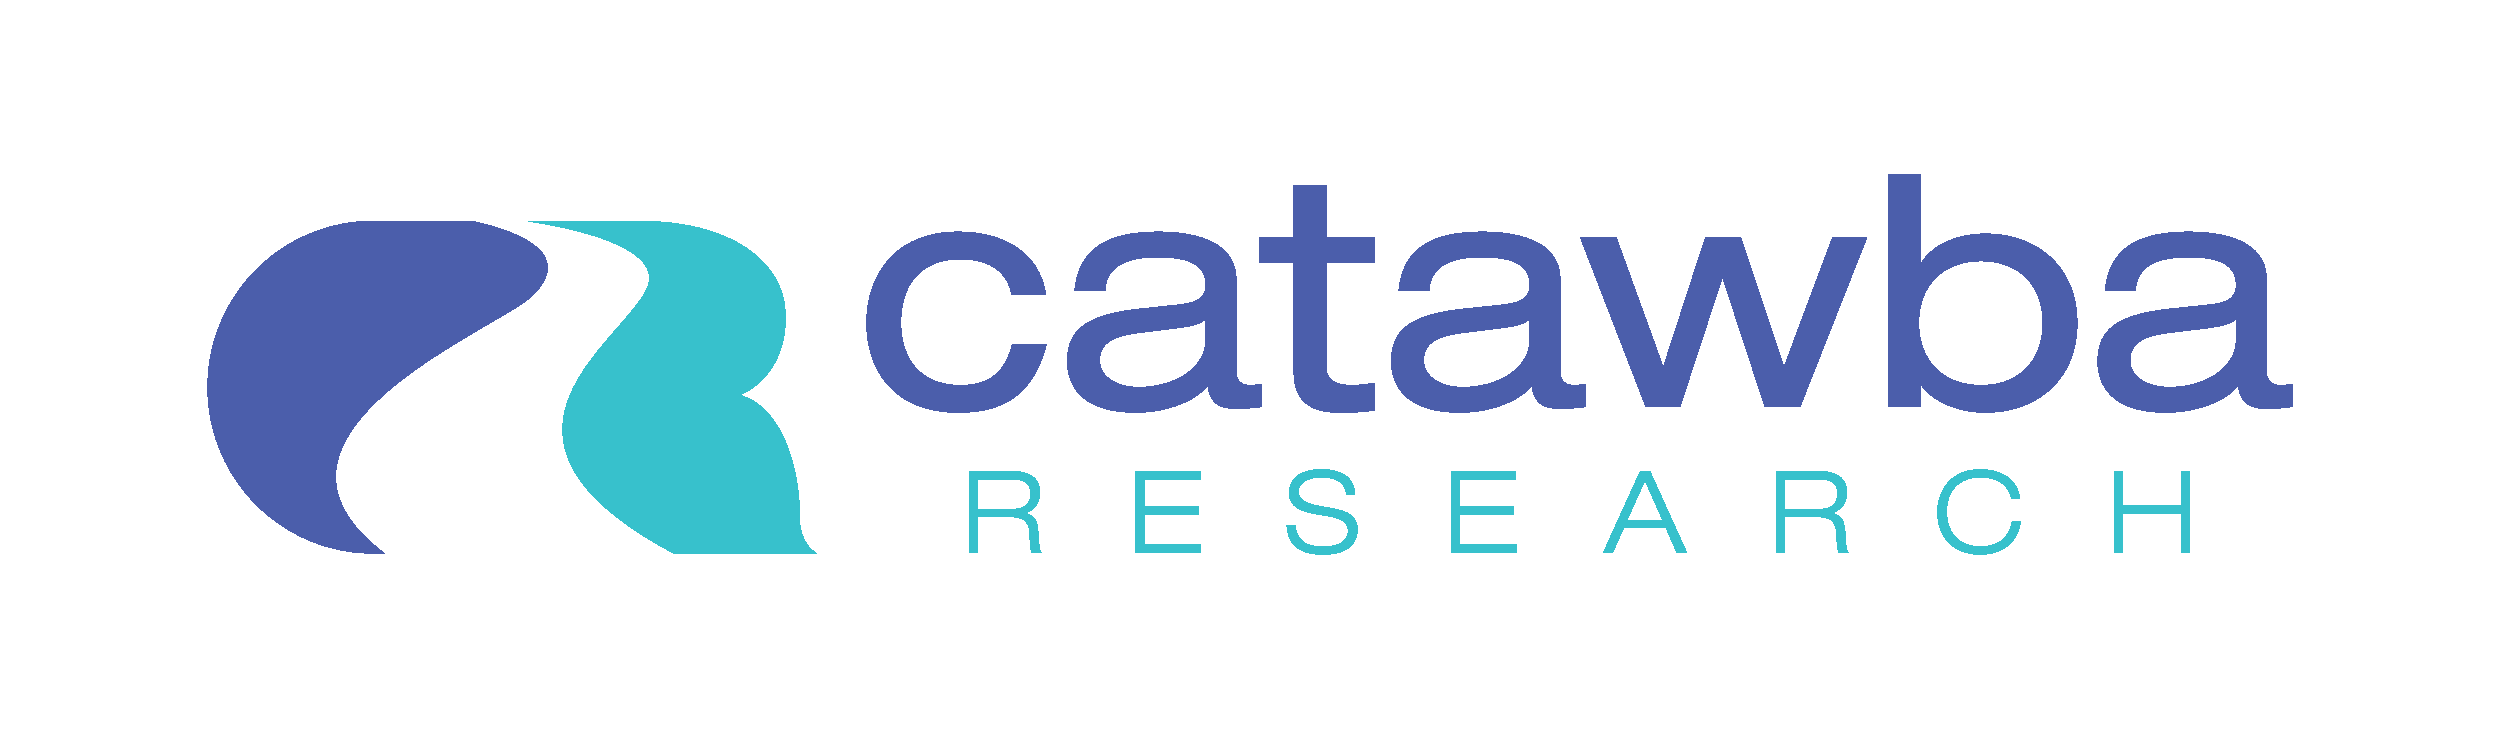 Full Catawba color logo